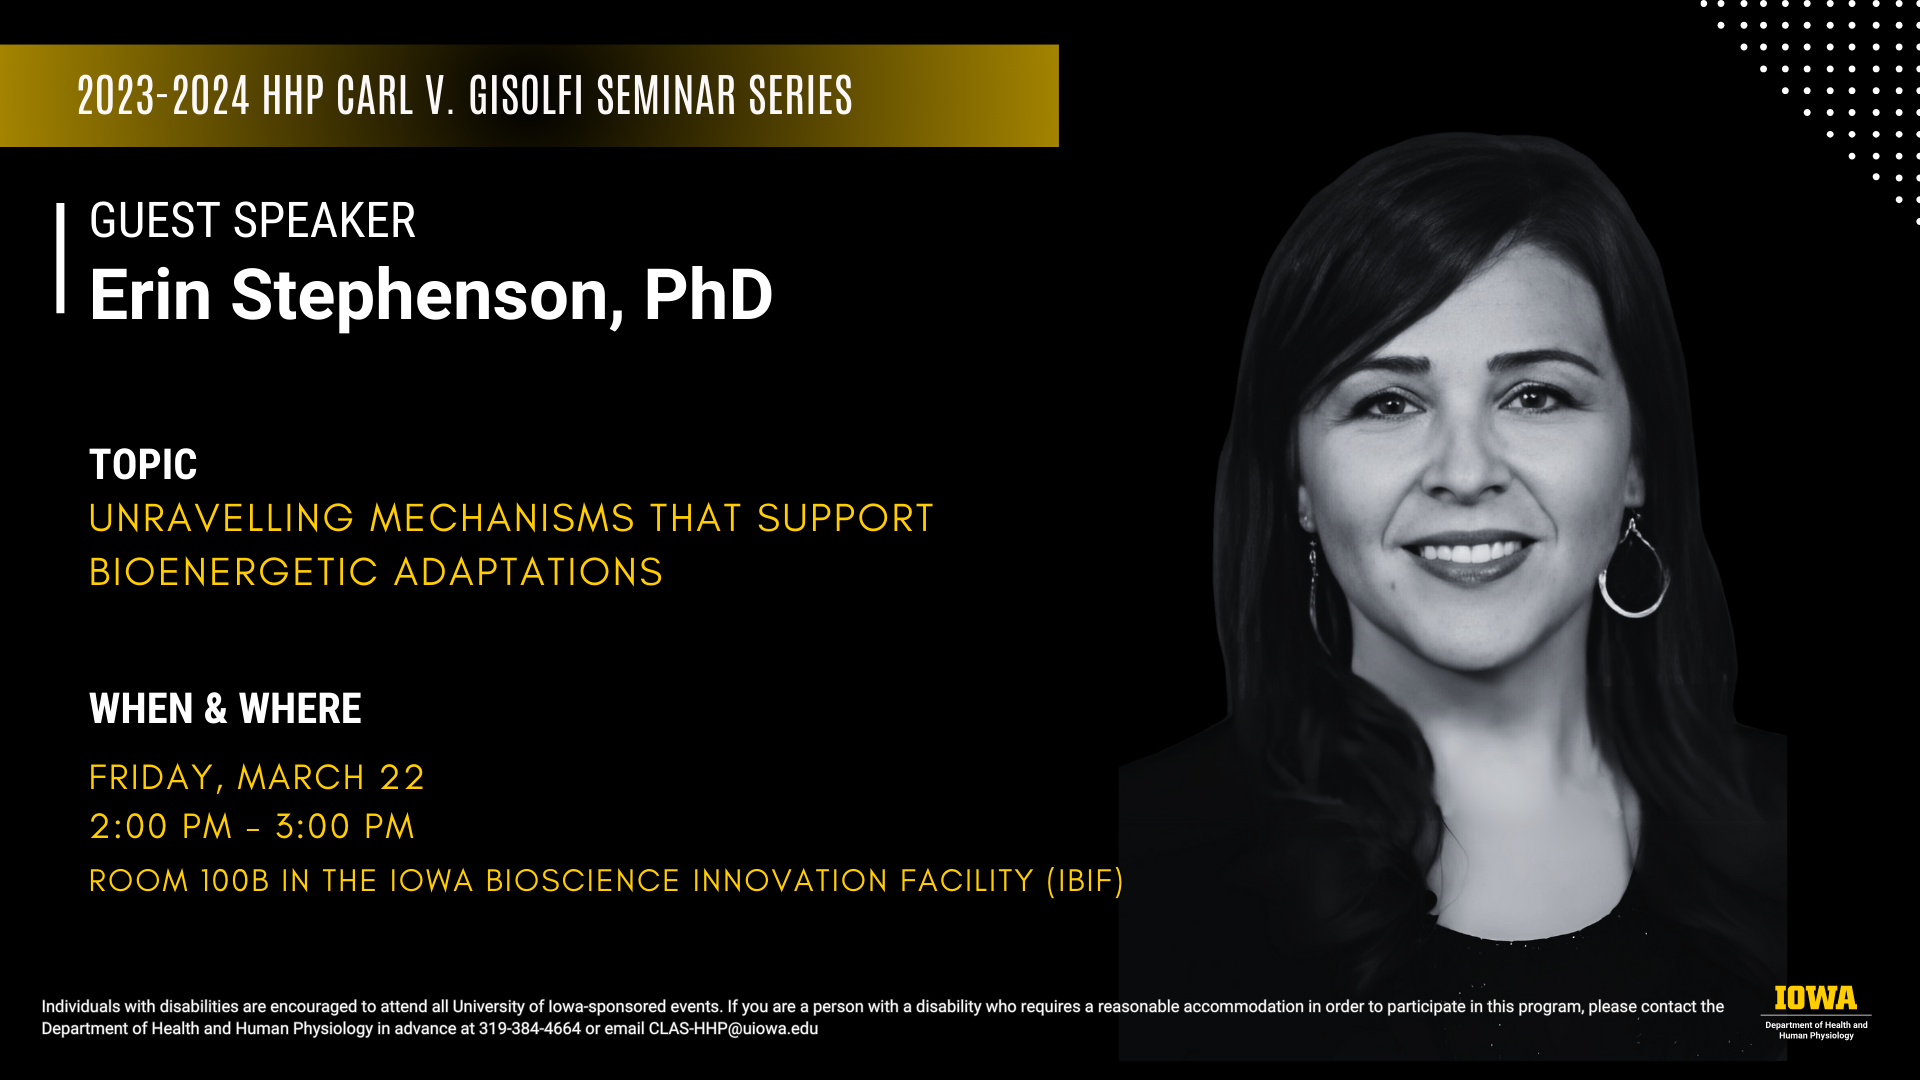 Erin Stephenson, PhD presents at the HHP Carl V. Gisolfi Seminar Series